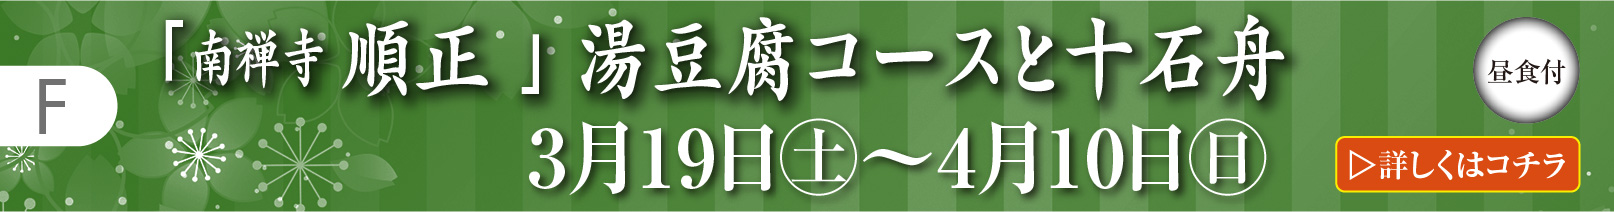 F:「南禅寺 順正」湯豆腐コースと十石舟(昼食付)